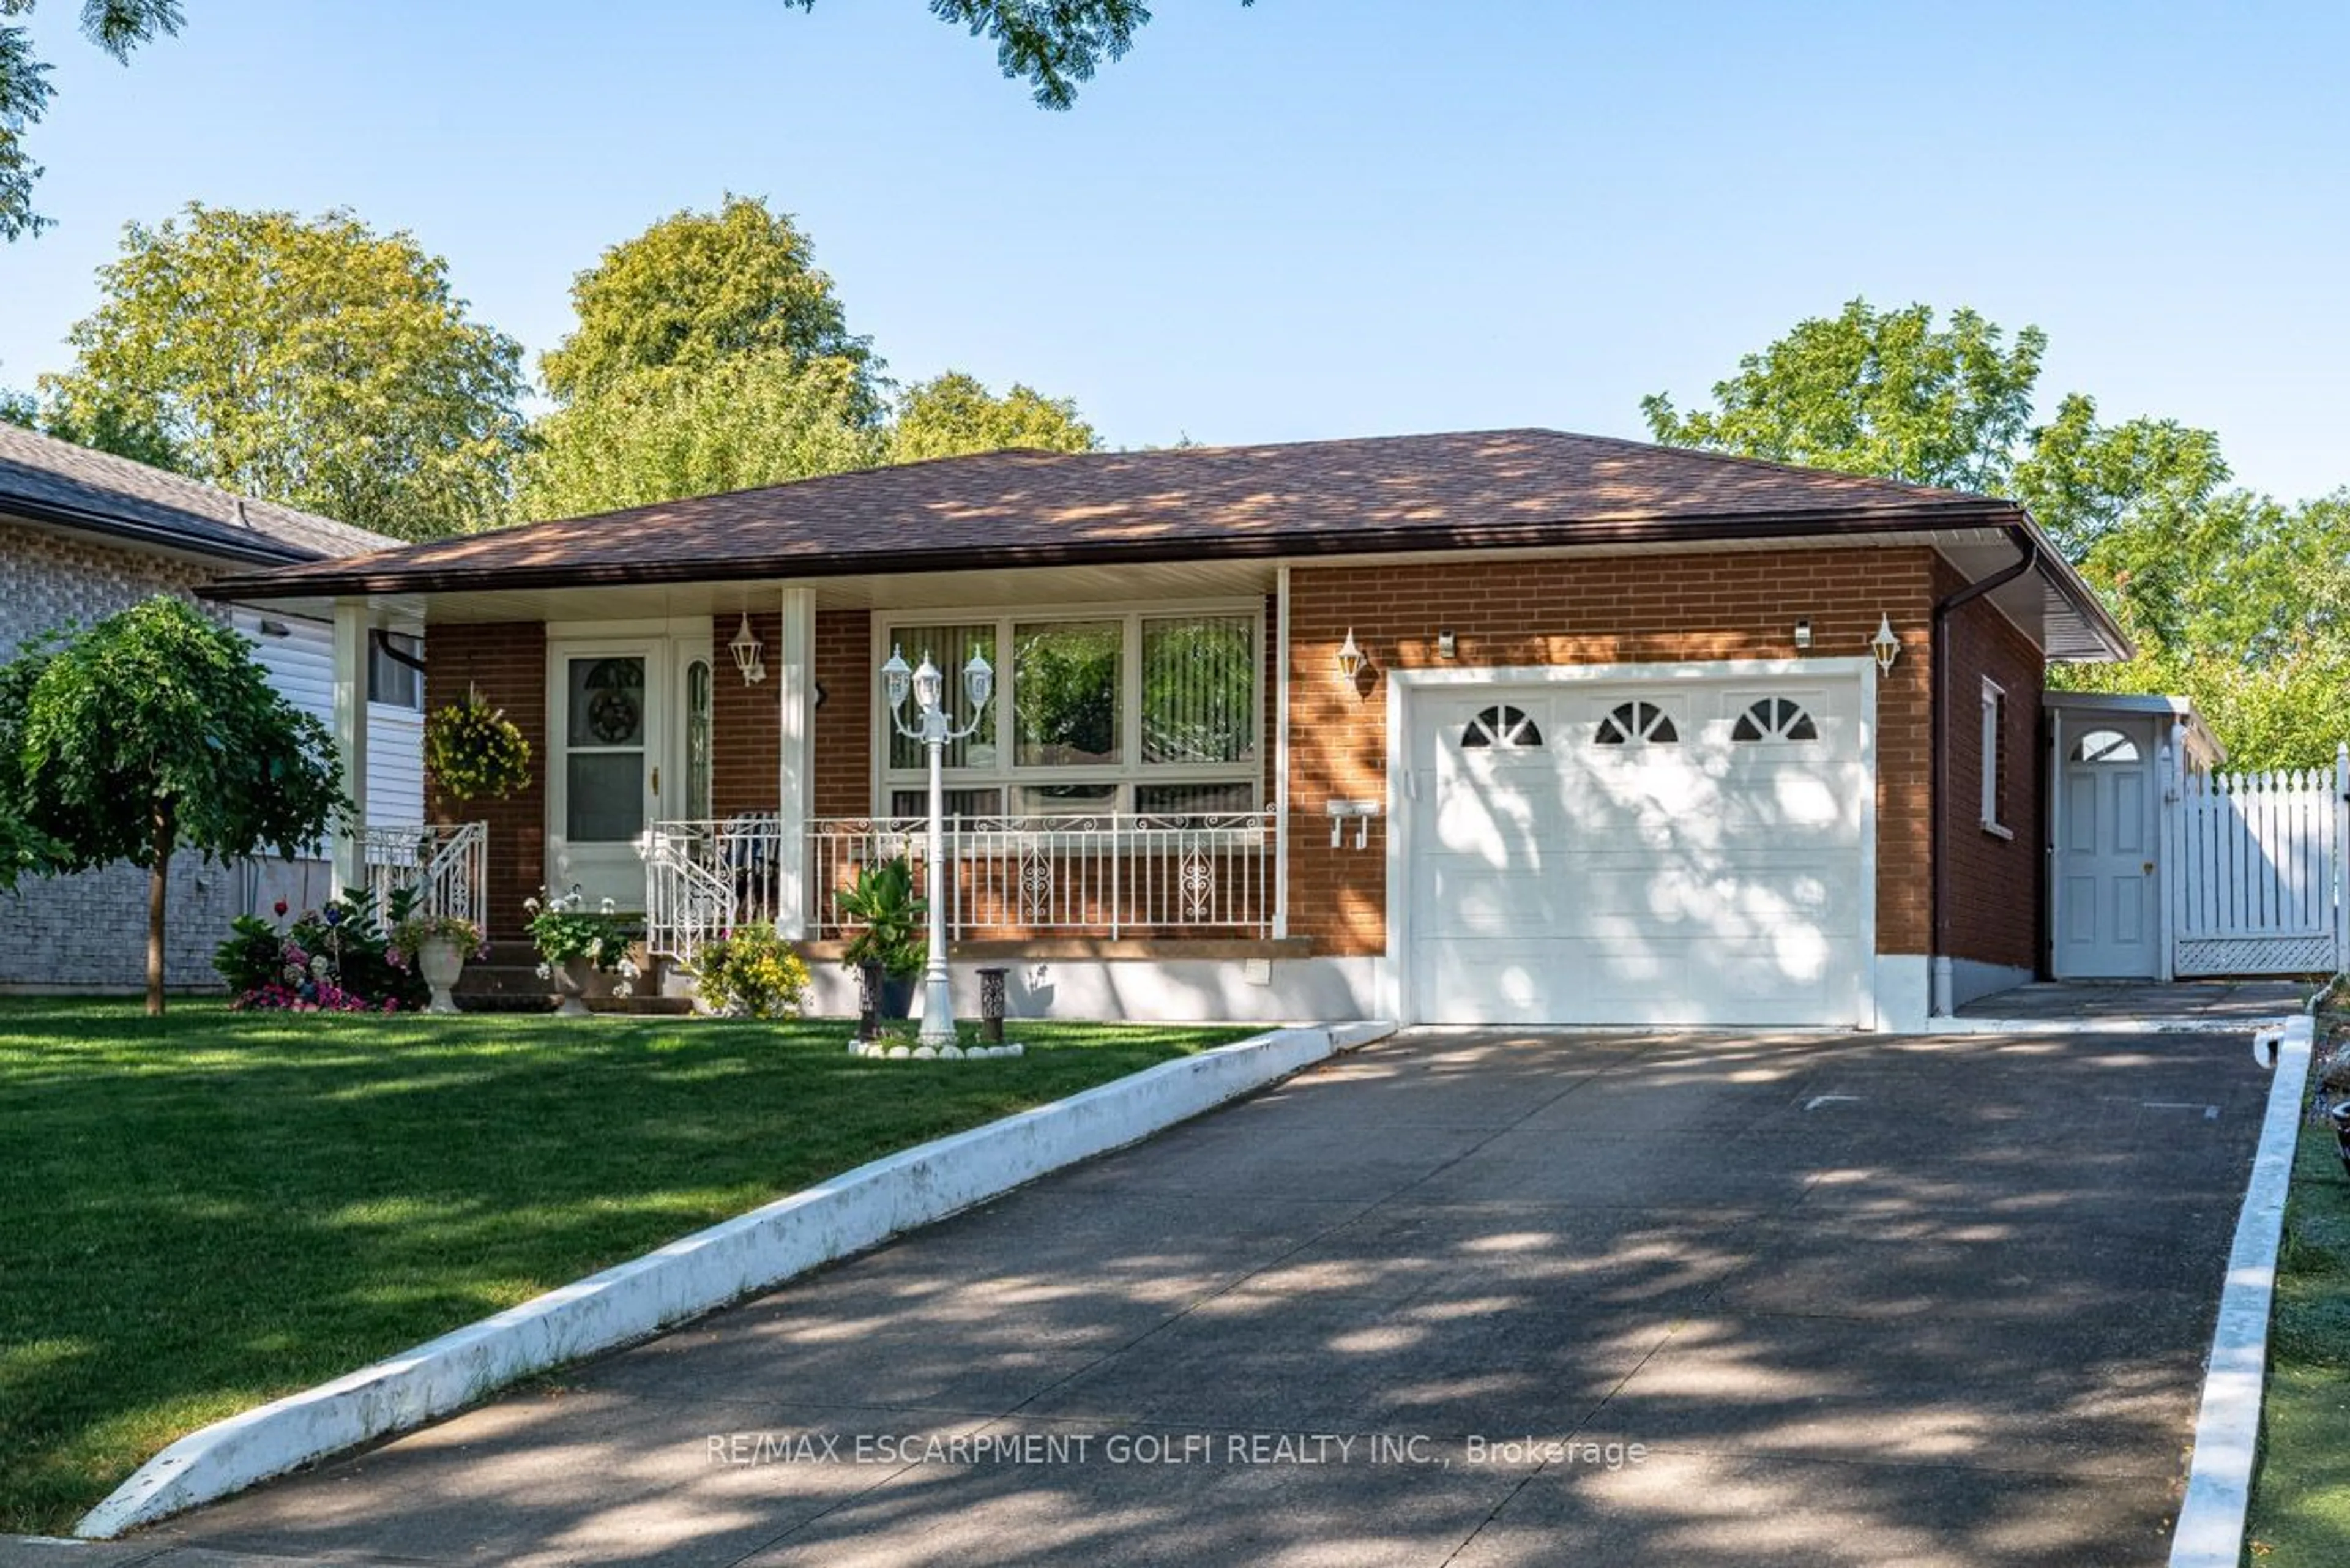 Home with brick exterior material for 5061 University Ave, Niagara Falls Ontario L2E 7B2